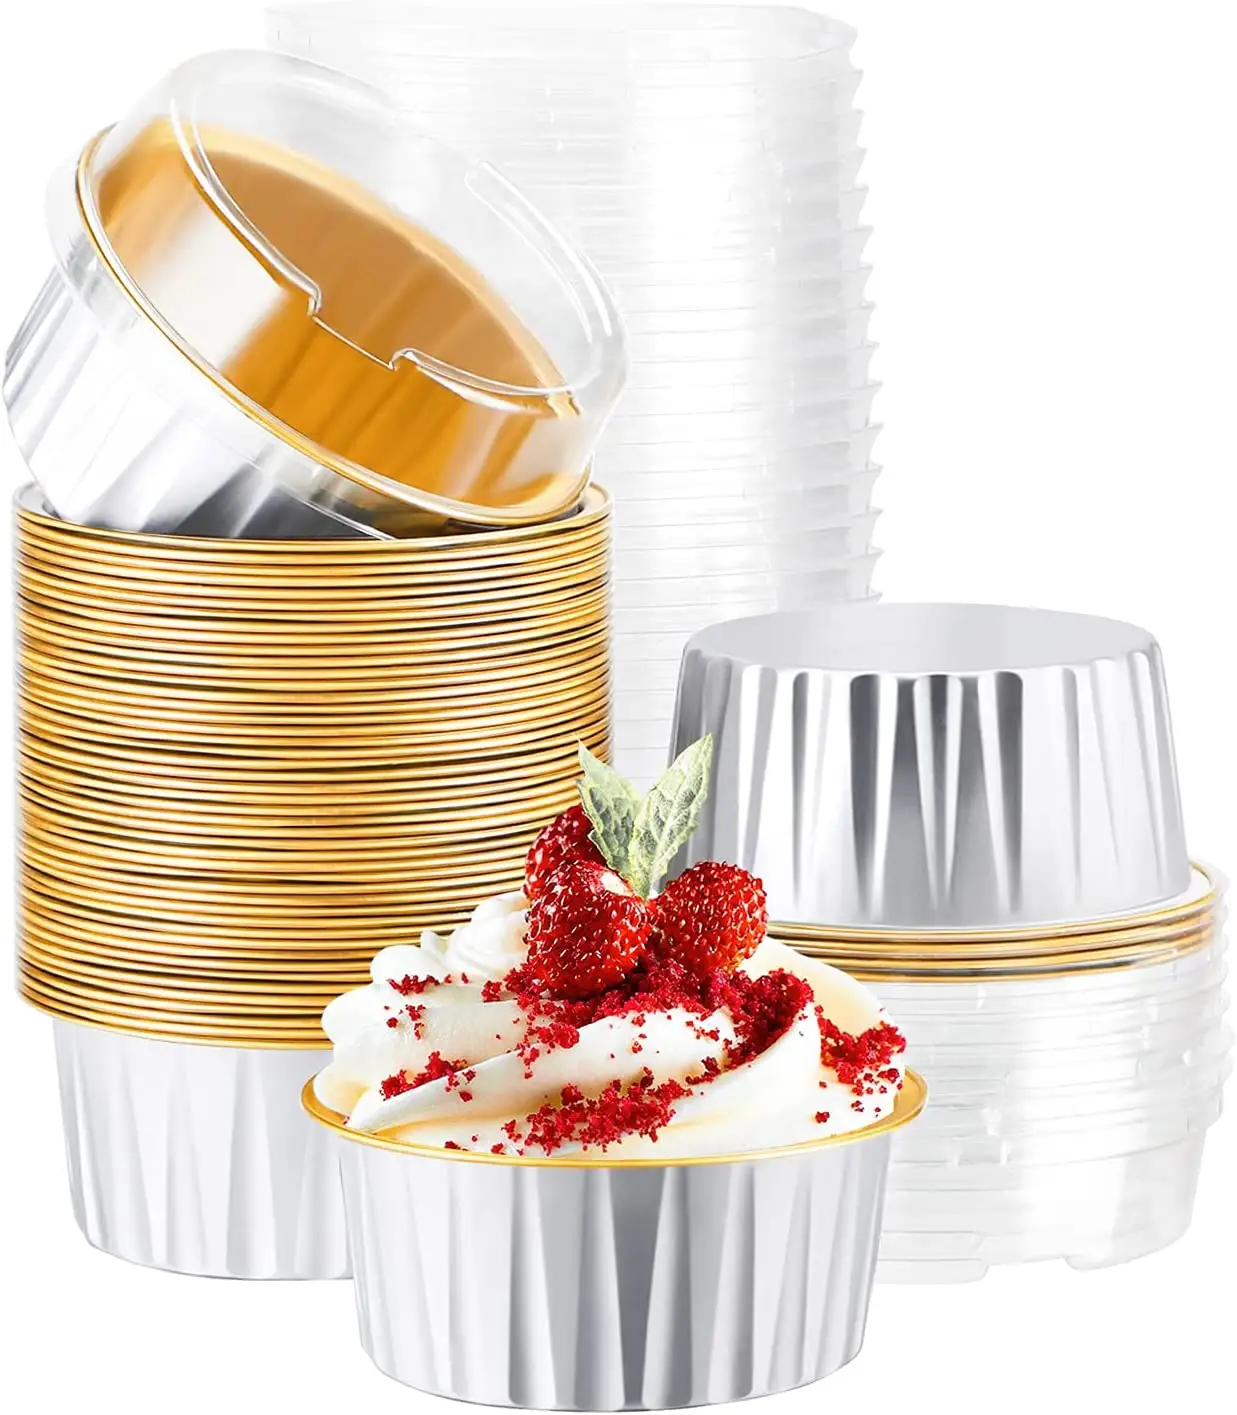 Dessert Containers with Lids, 50pcs 5oz Aluminum Foil Baking Cups Muffin Liners, Disposable Foil Ramekins